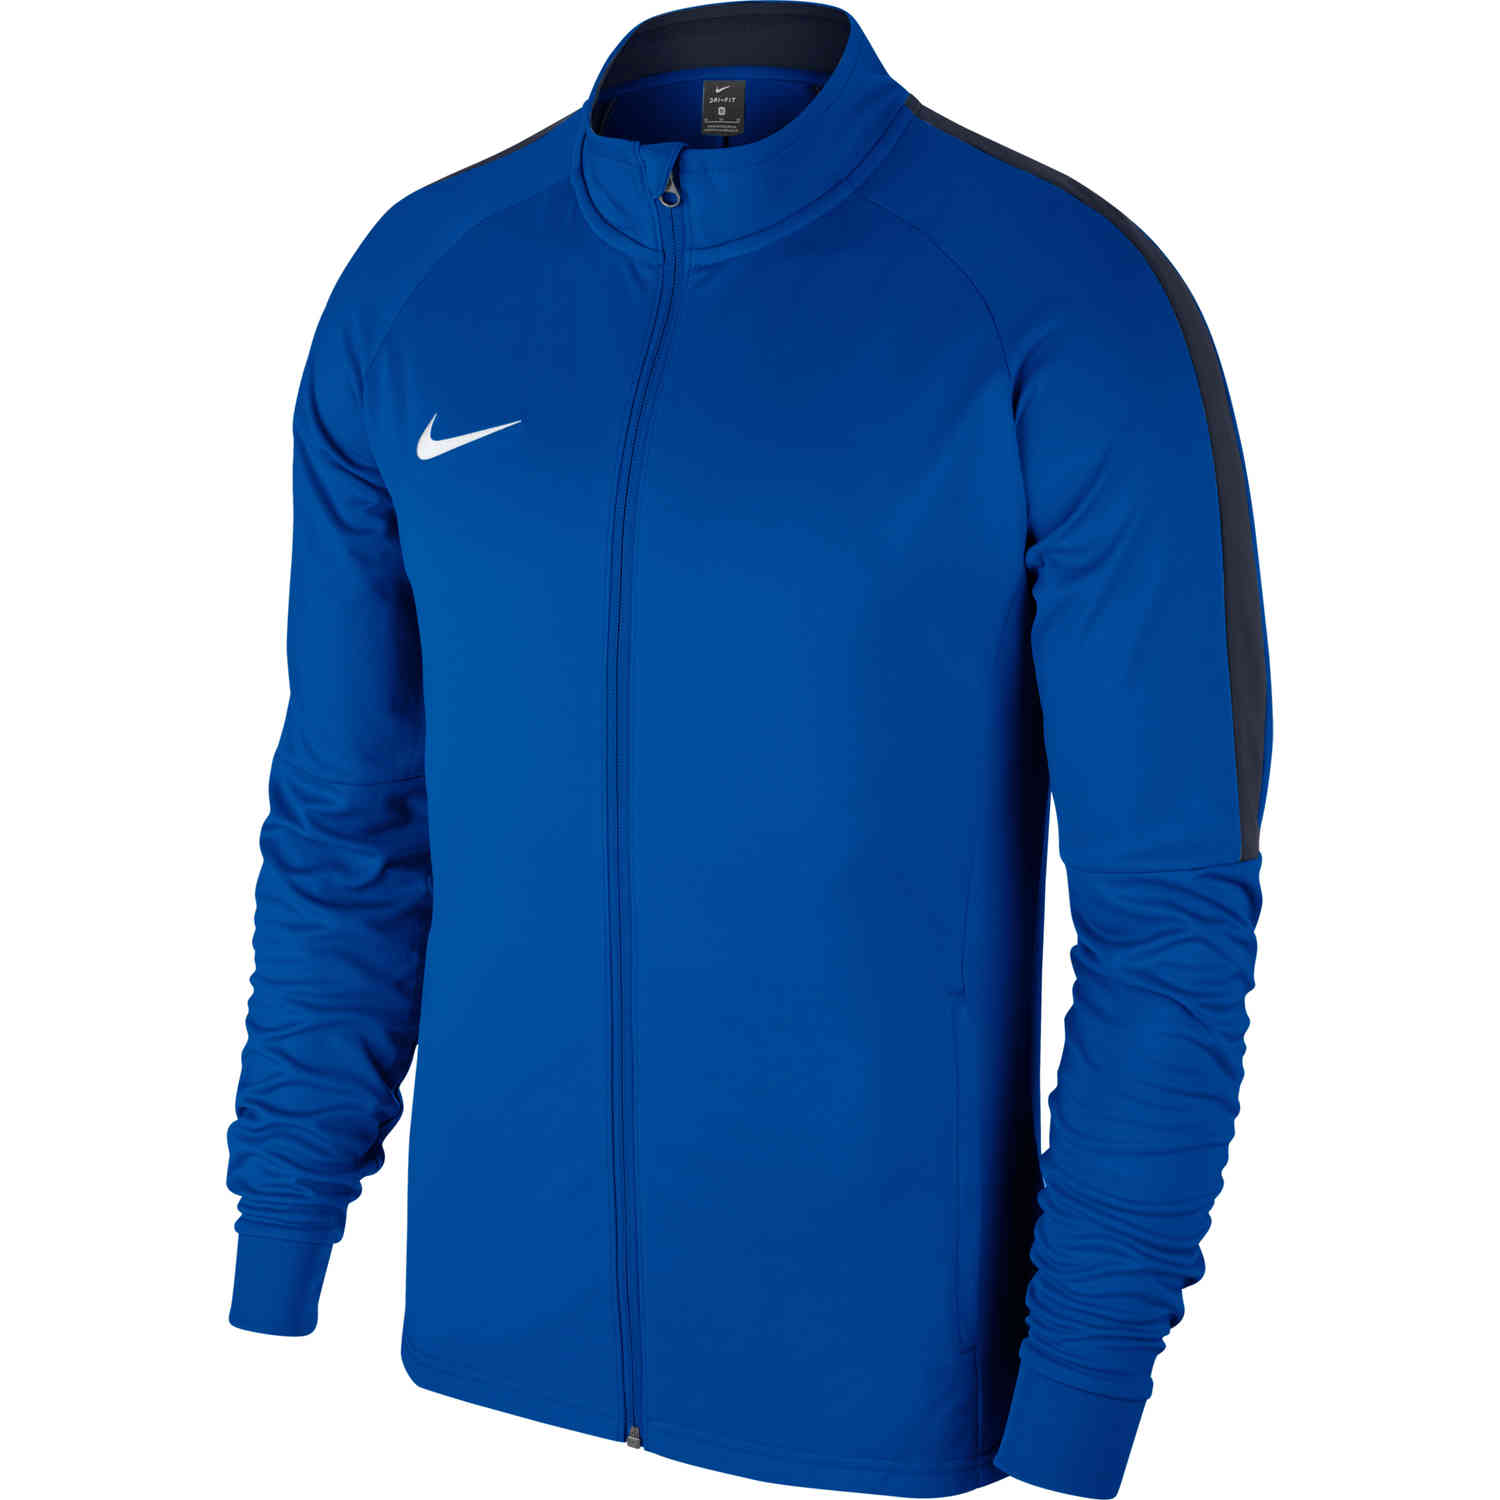 Kids Nike Academy18 Track Jacket - Royal Blue -